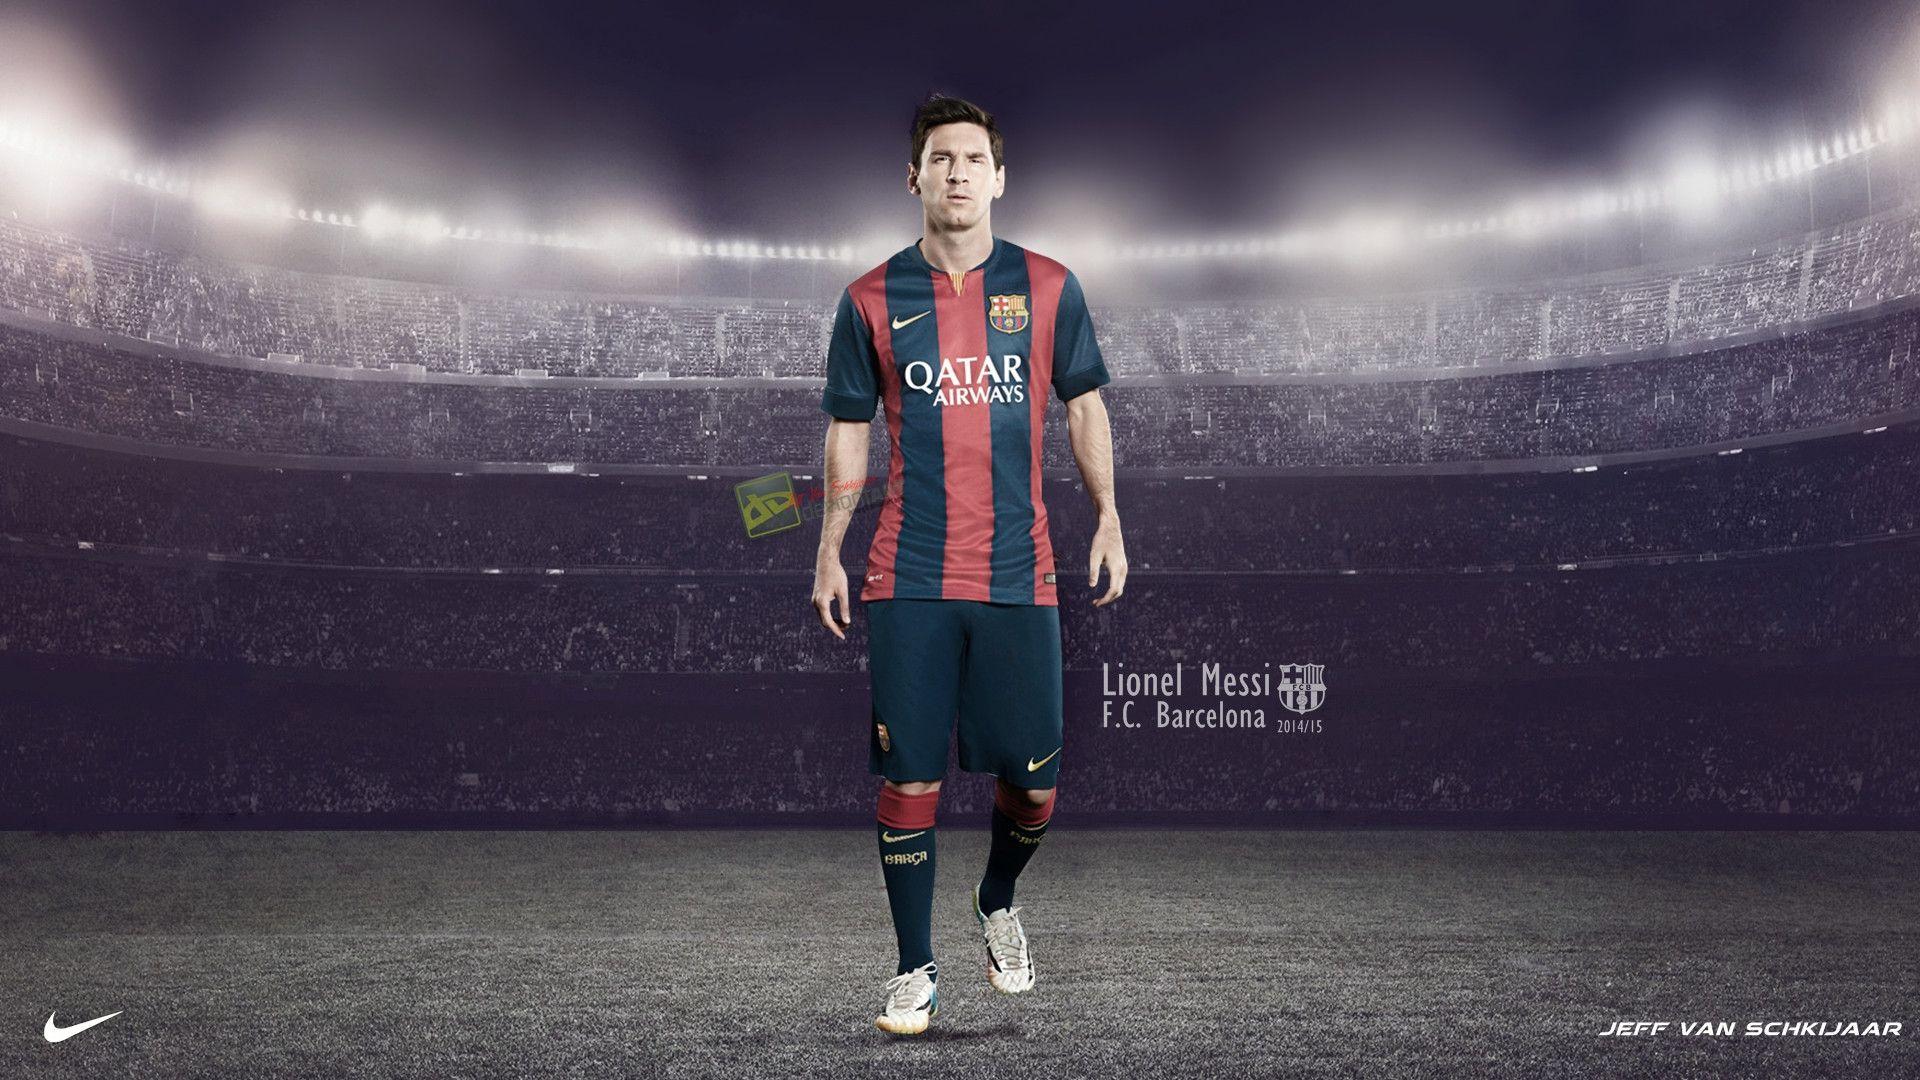 FIFA 15 Lionel Messi Cover Games Wallpaper HD Wallpaper